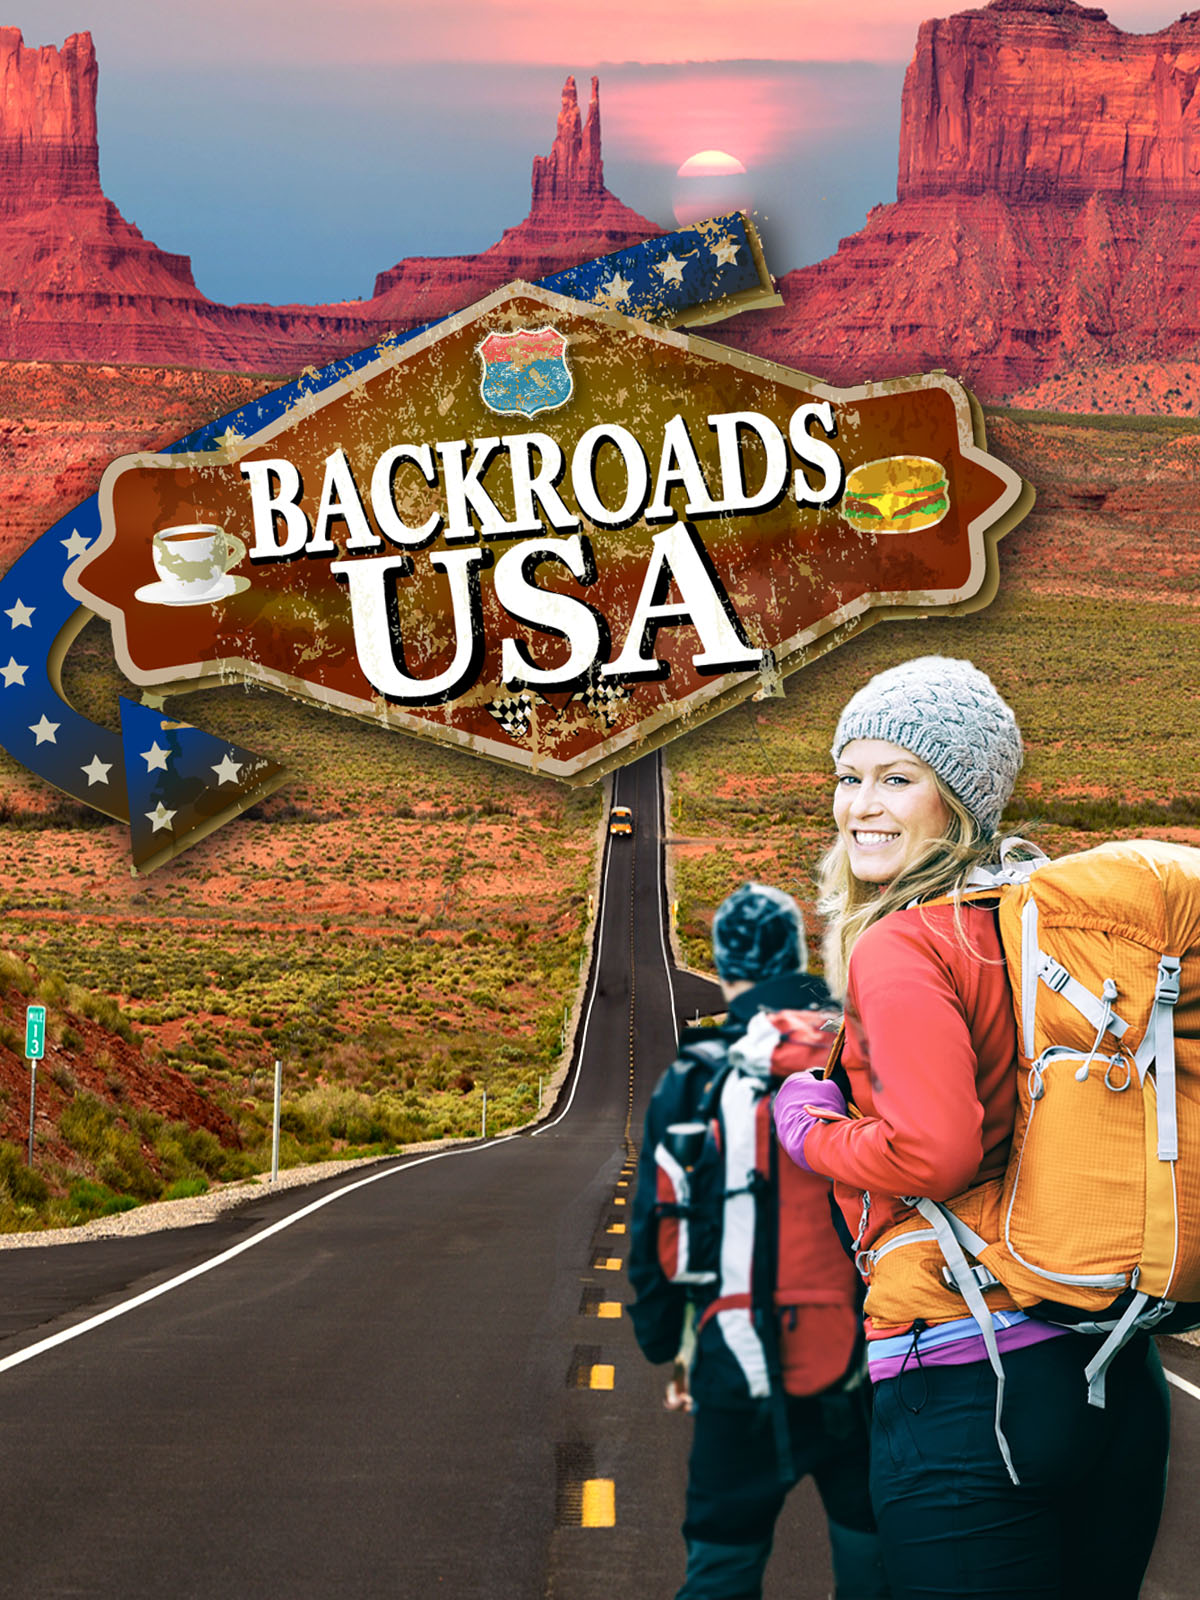 Backroads USA